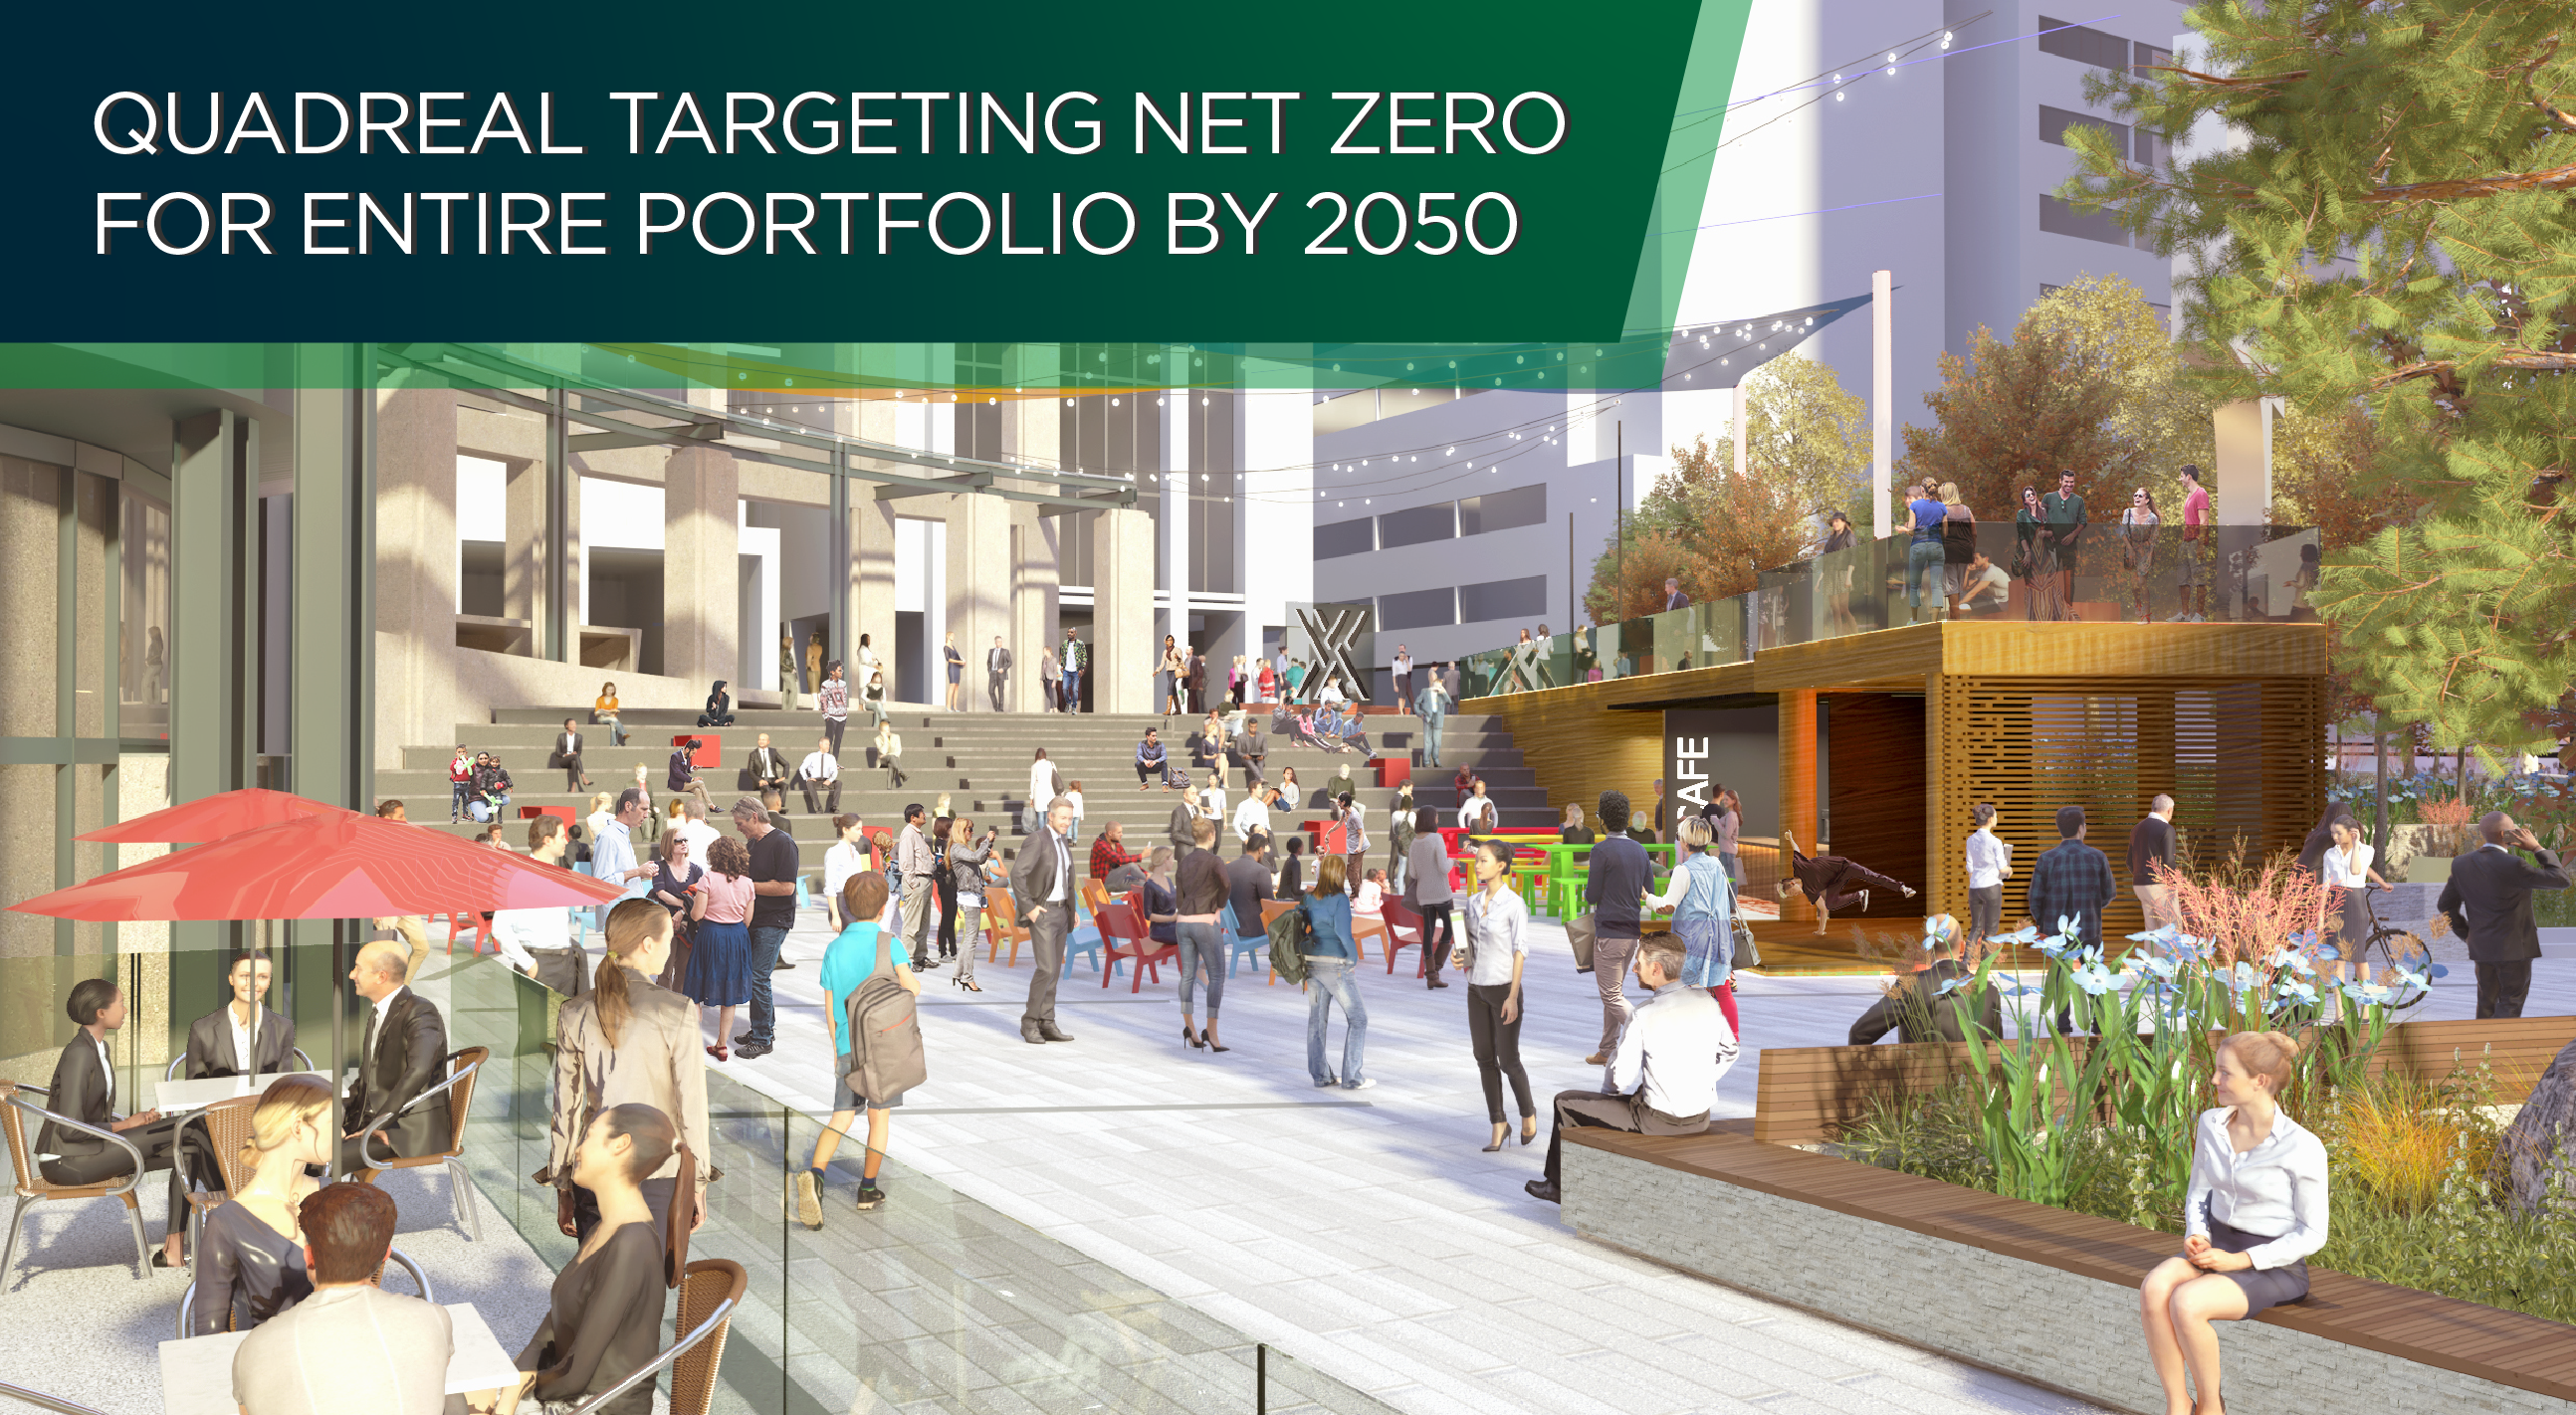 QuadReal target net zero for entire portfolio by 2050